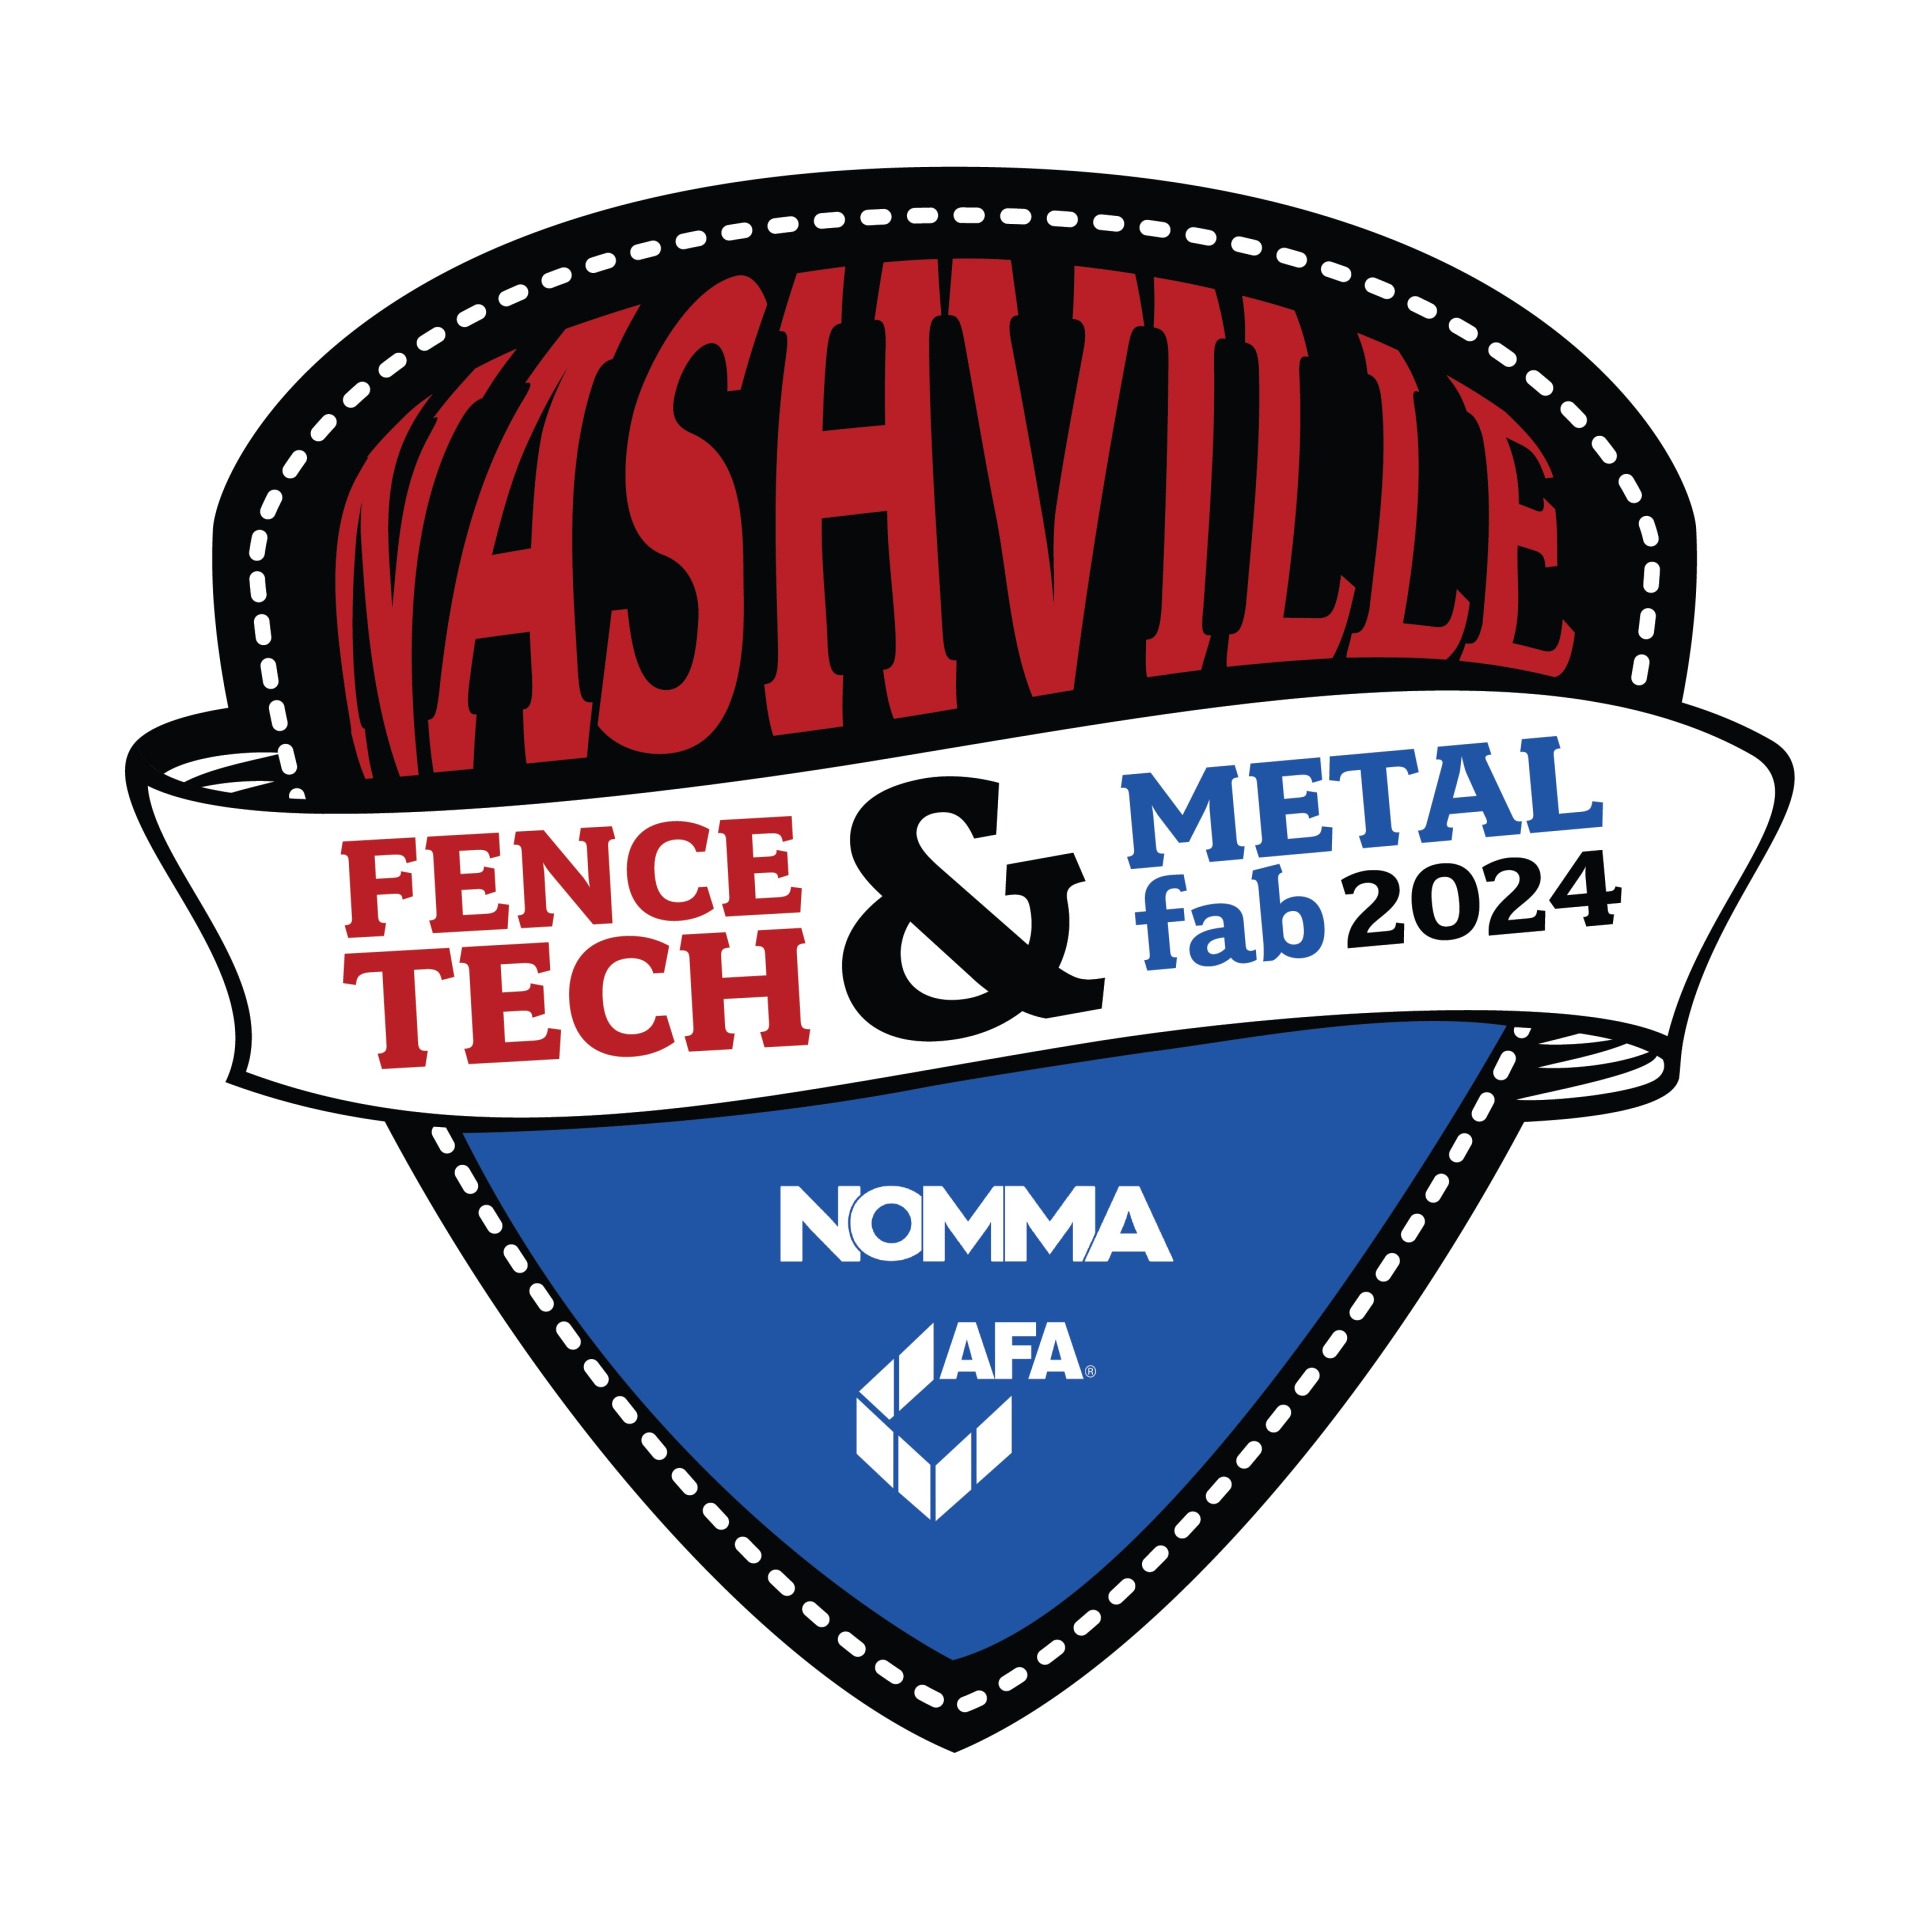 FenceTech expo 2024 logo